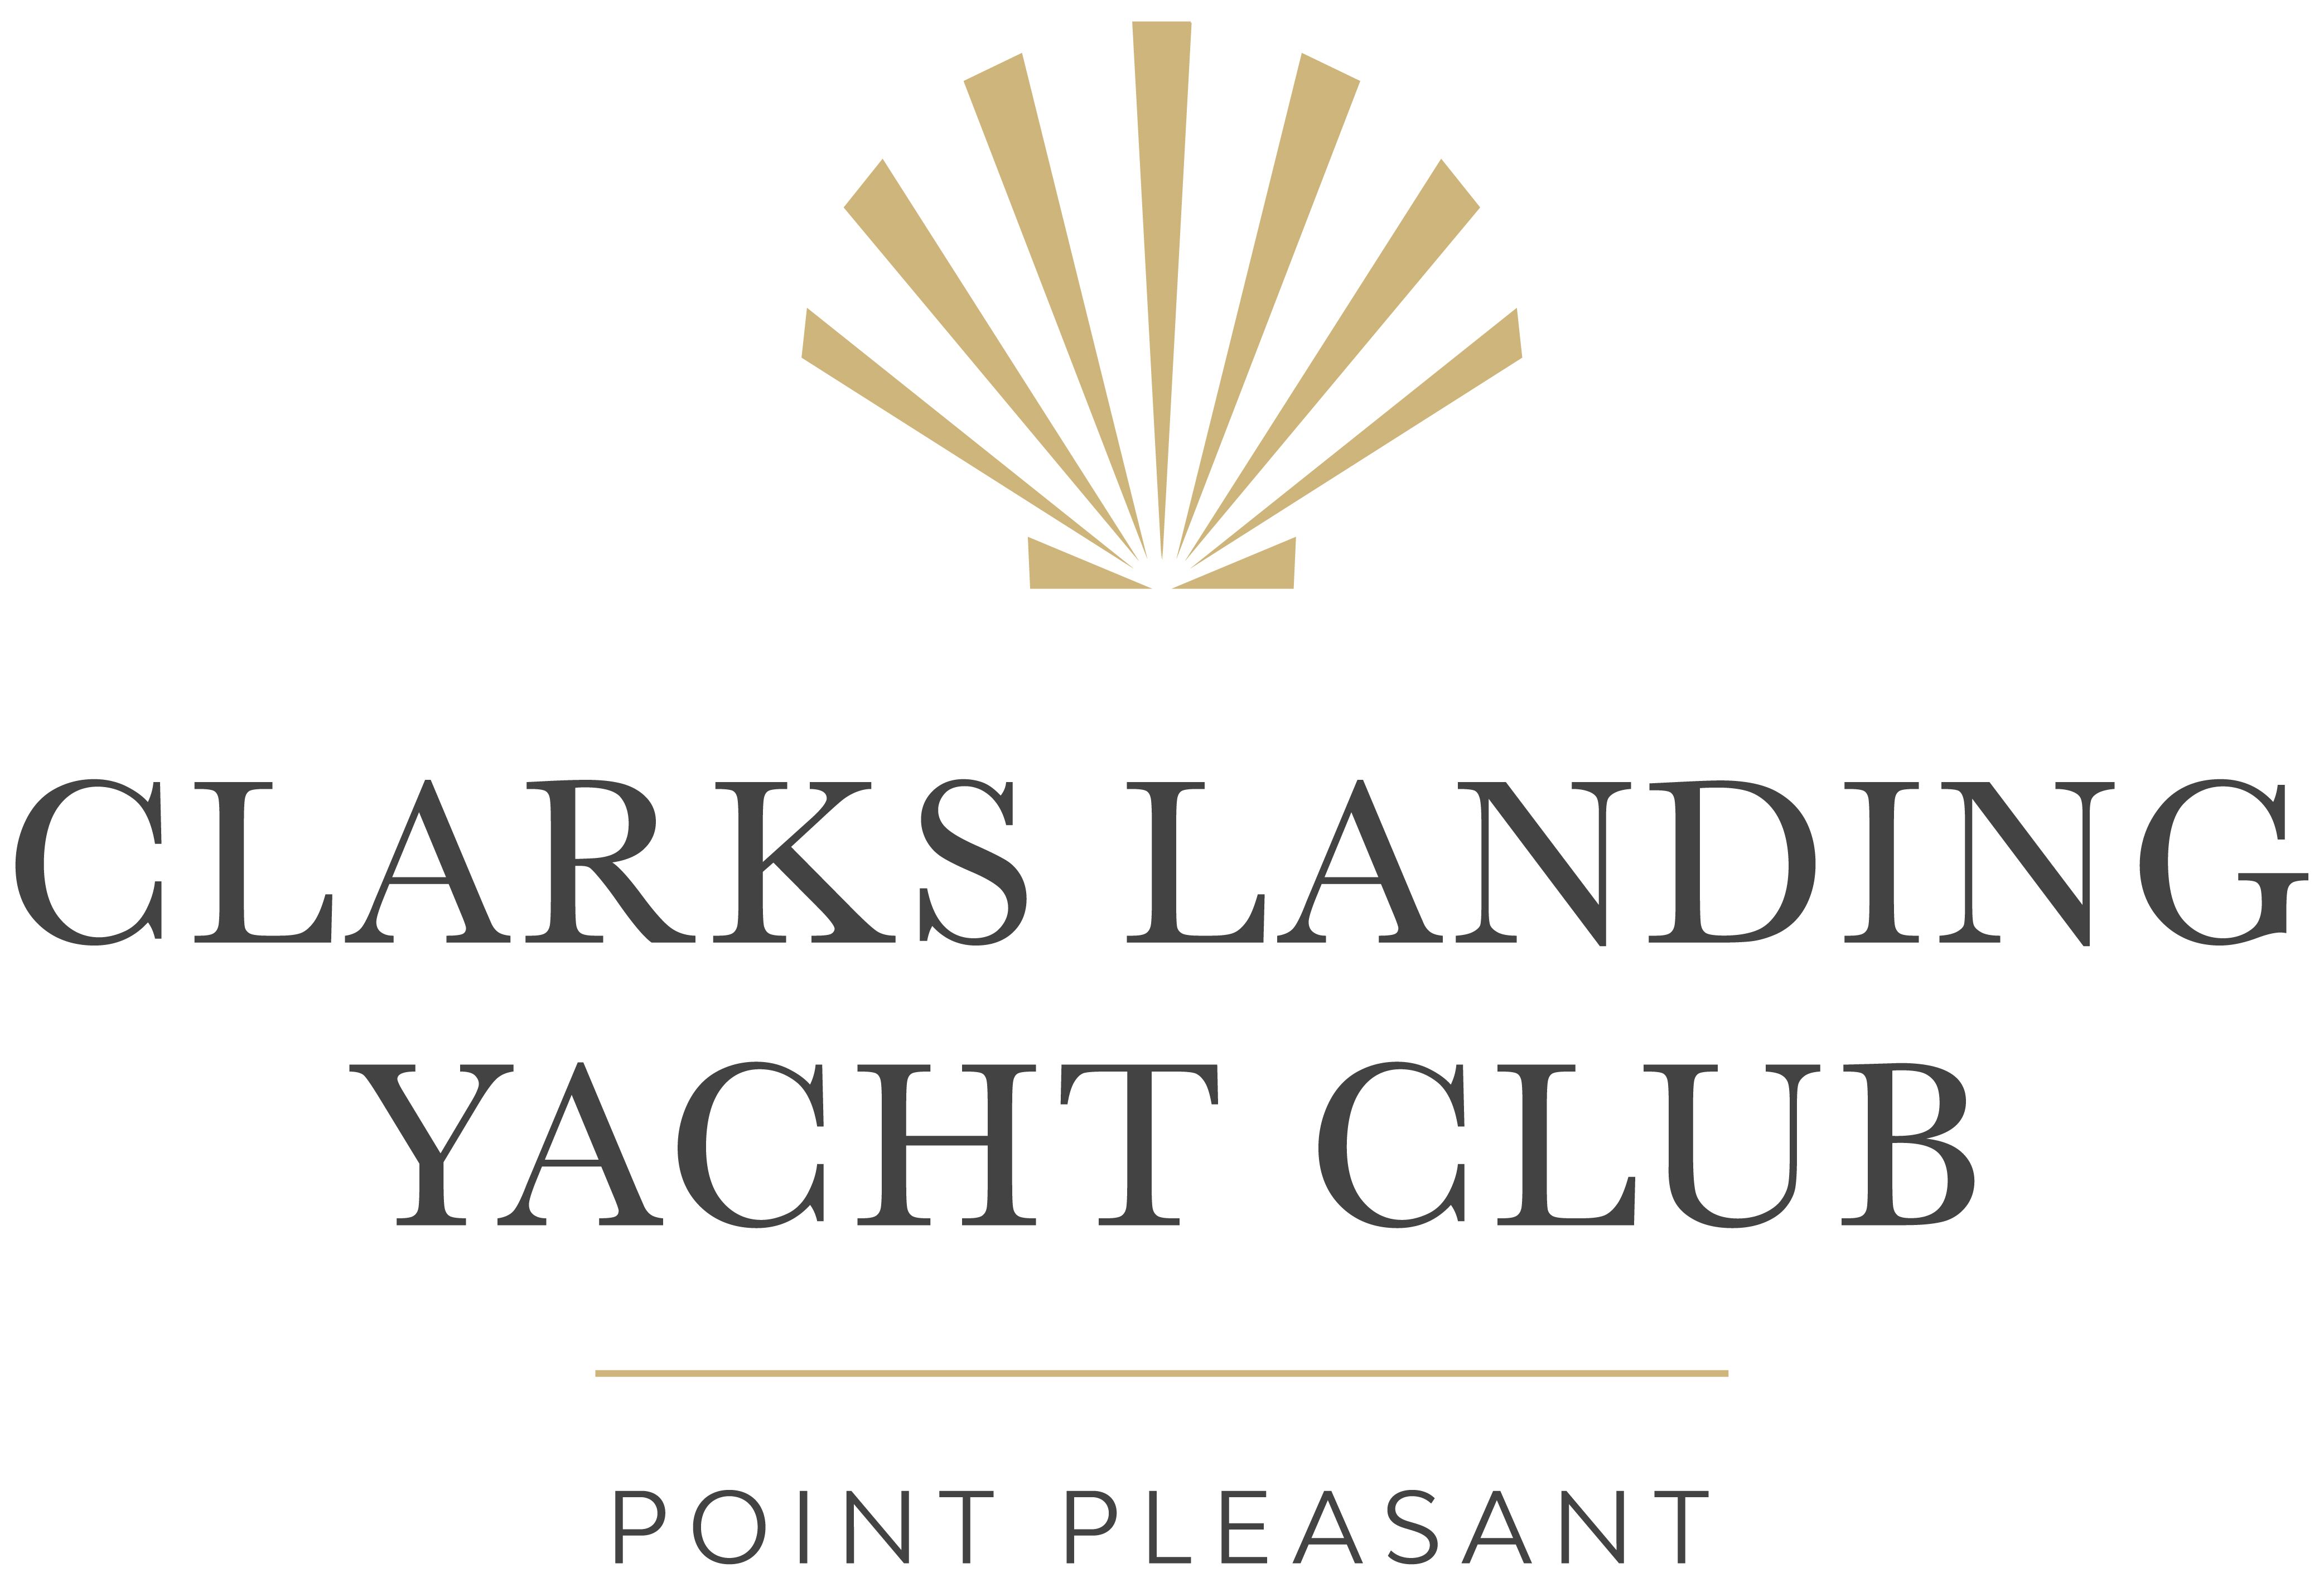 clarks landing yacht club address